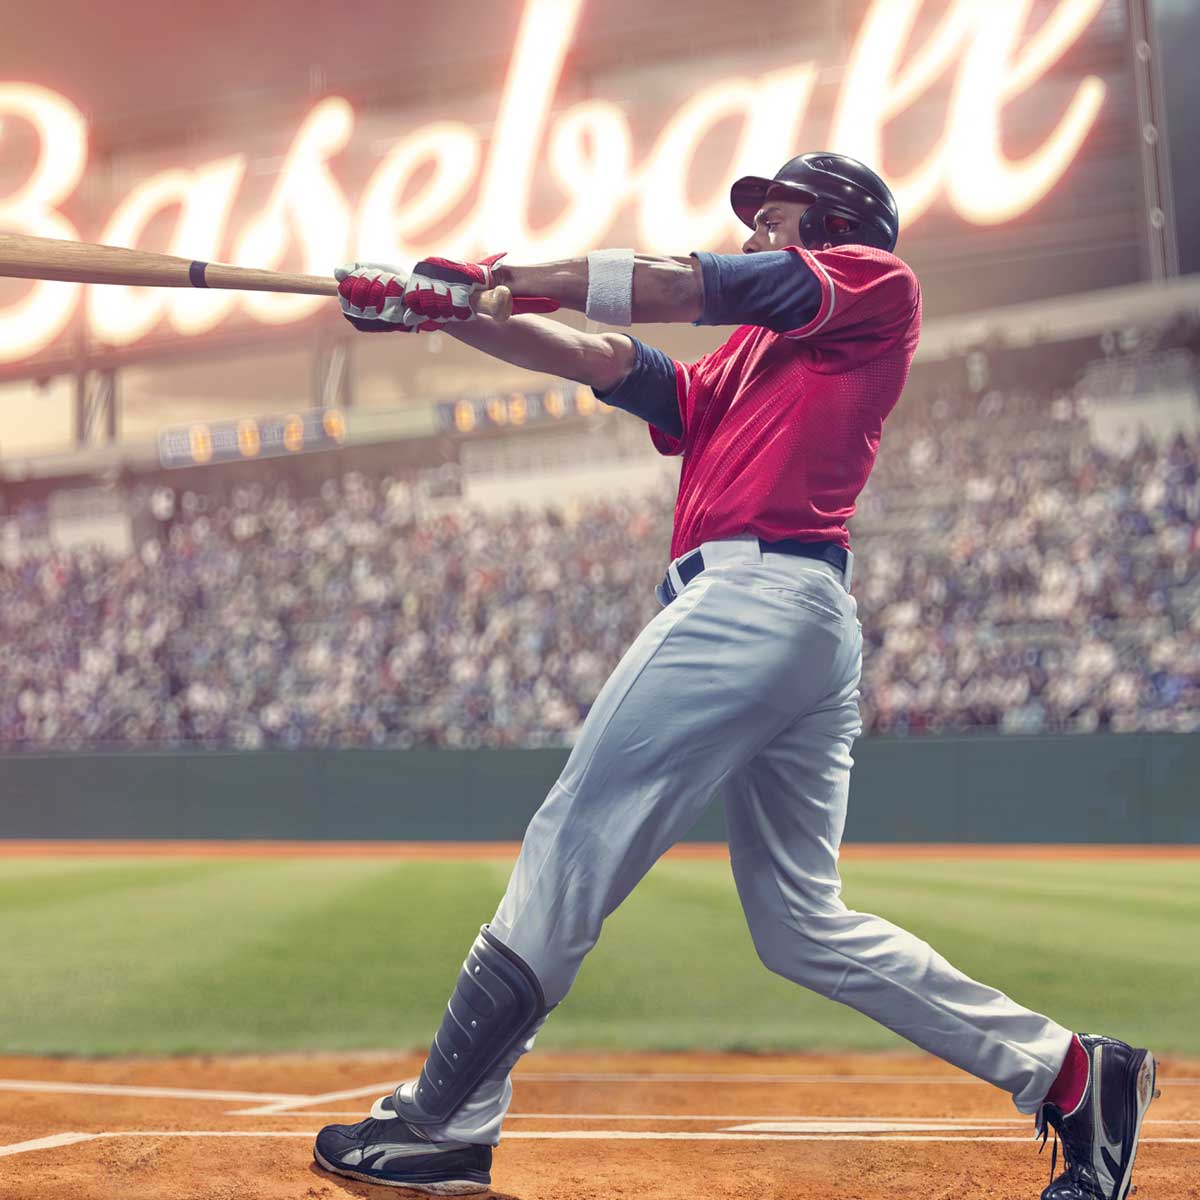 Baseball Uniforms Manufacturers in USA